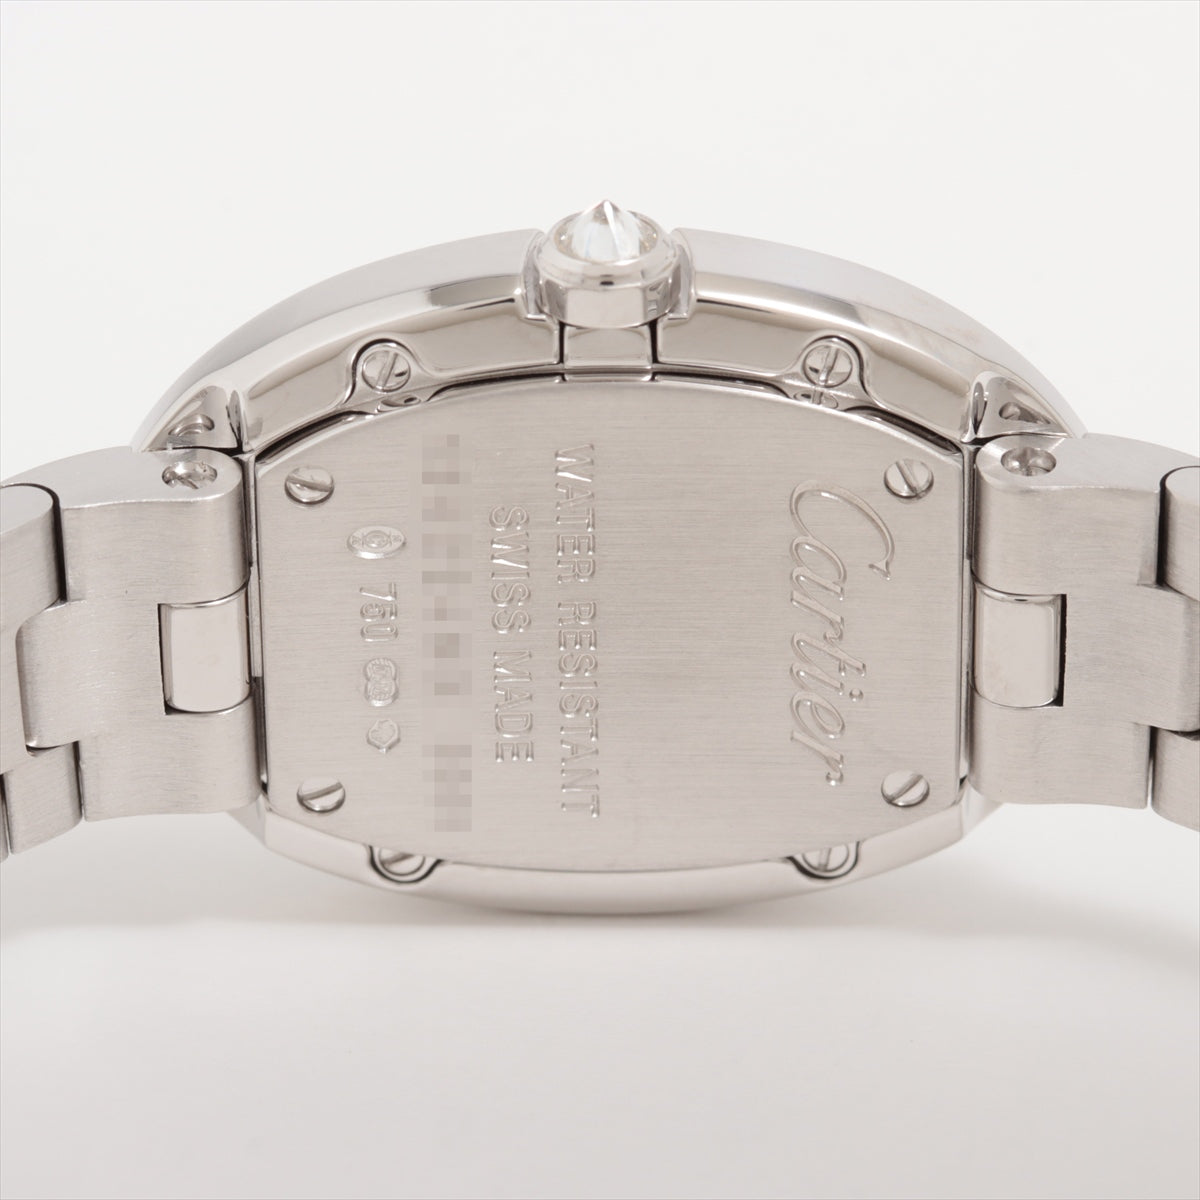 Cartier Benuval SM WB520006 WG QZ Silver Character Panerai 2 Hours